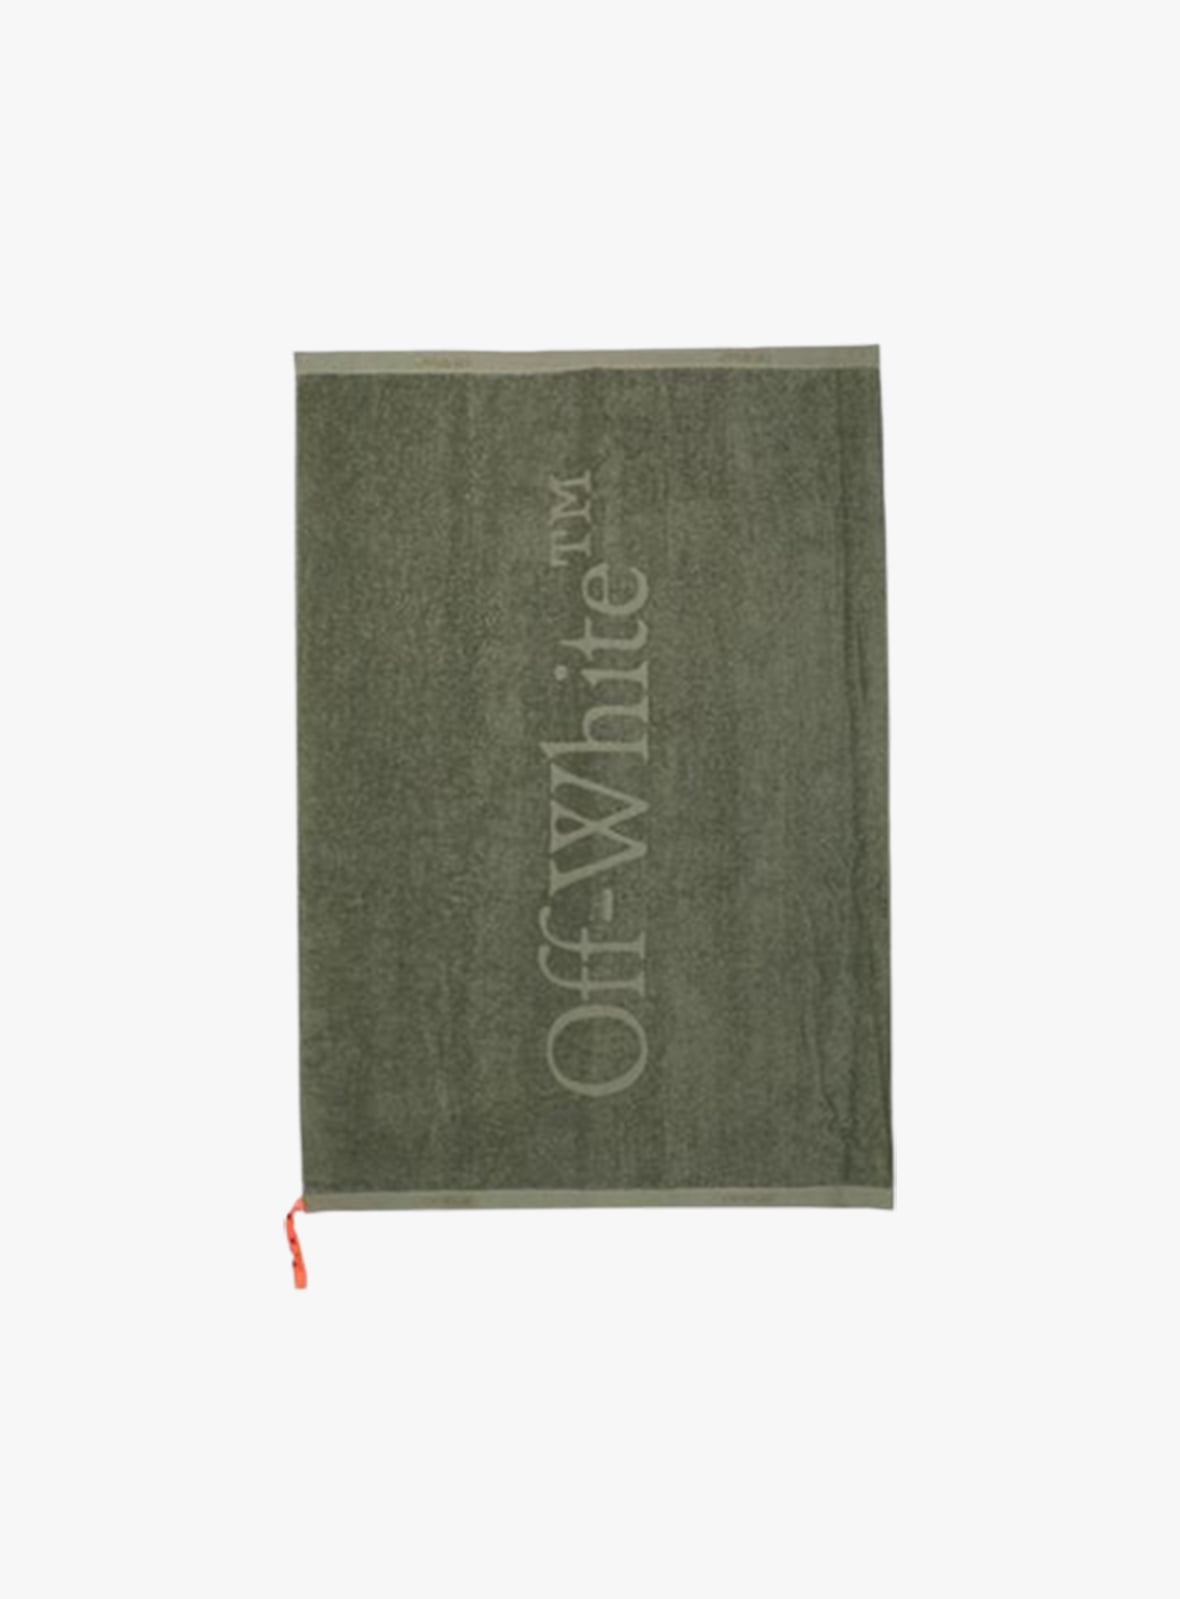 OFF WHITE HOME - General Accessory Off White HomeㅣOHZB008T23FA B001 5600